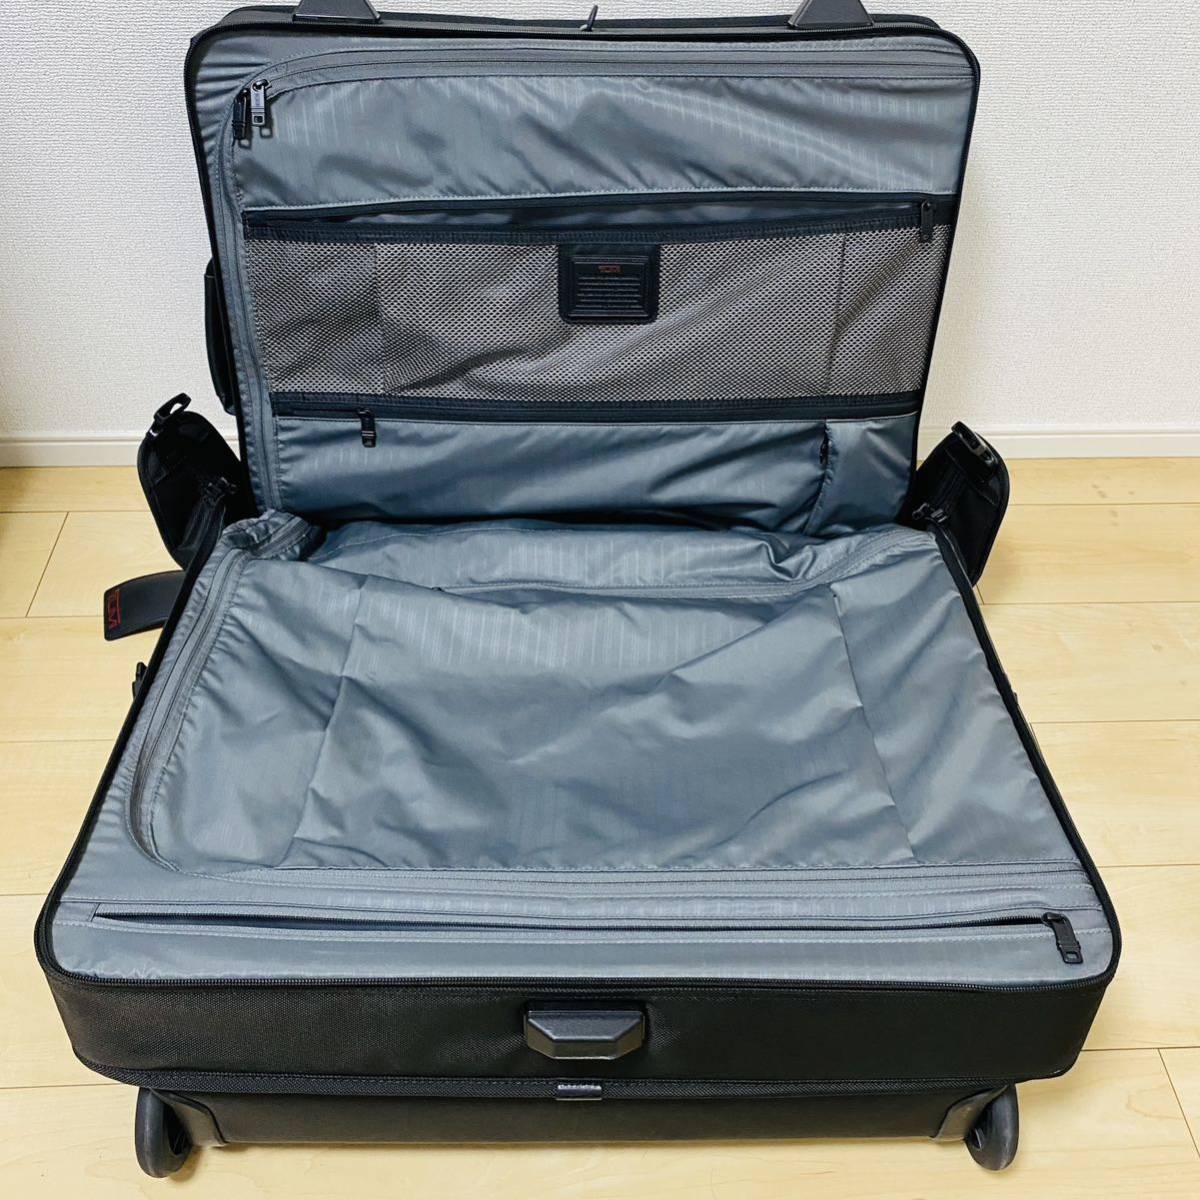 TUMI/ Tumi / carry bag / garment bag / suitcase / business / business trip / travel / black /